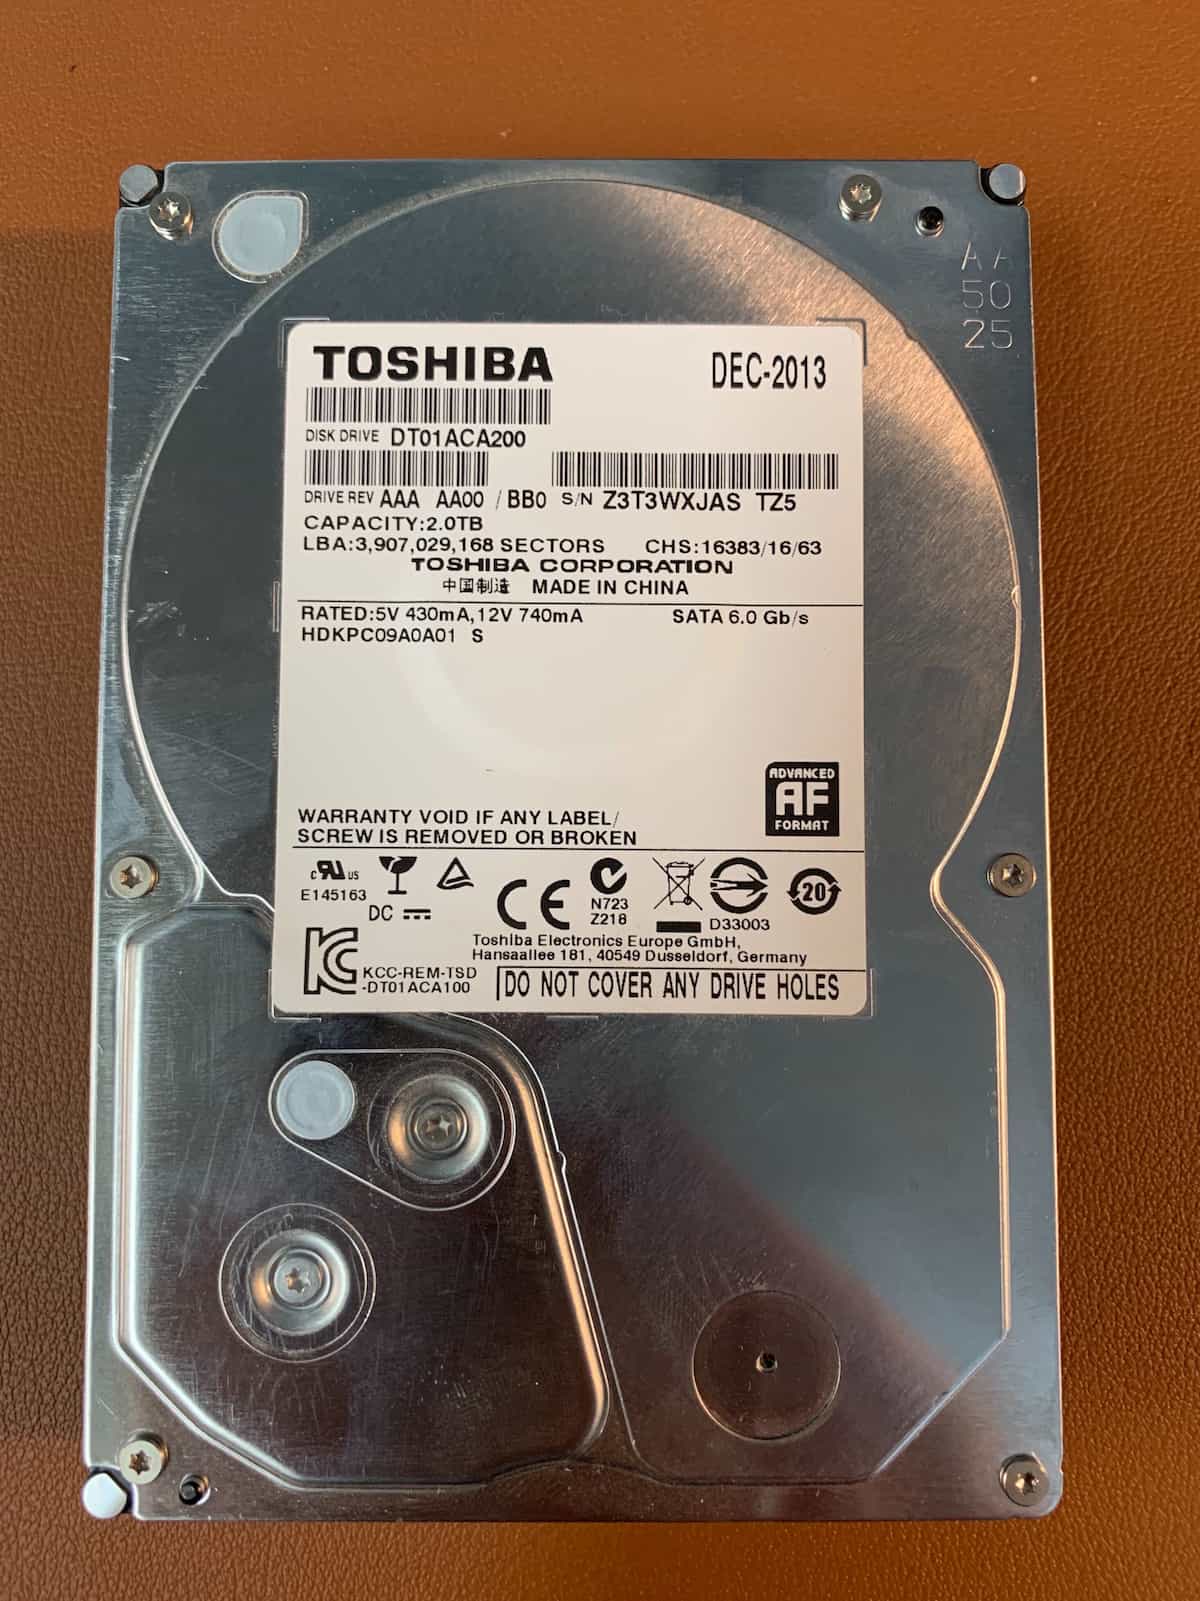 Toshiba DT01ACA200 2TB Drive